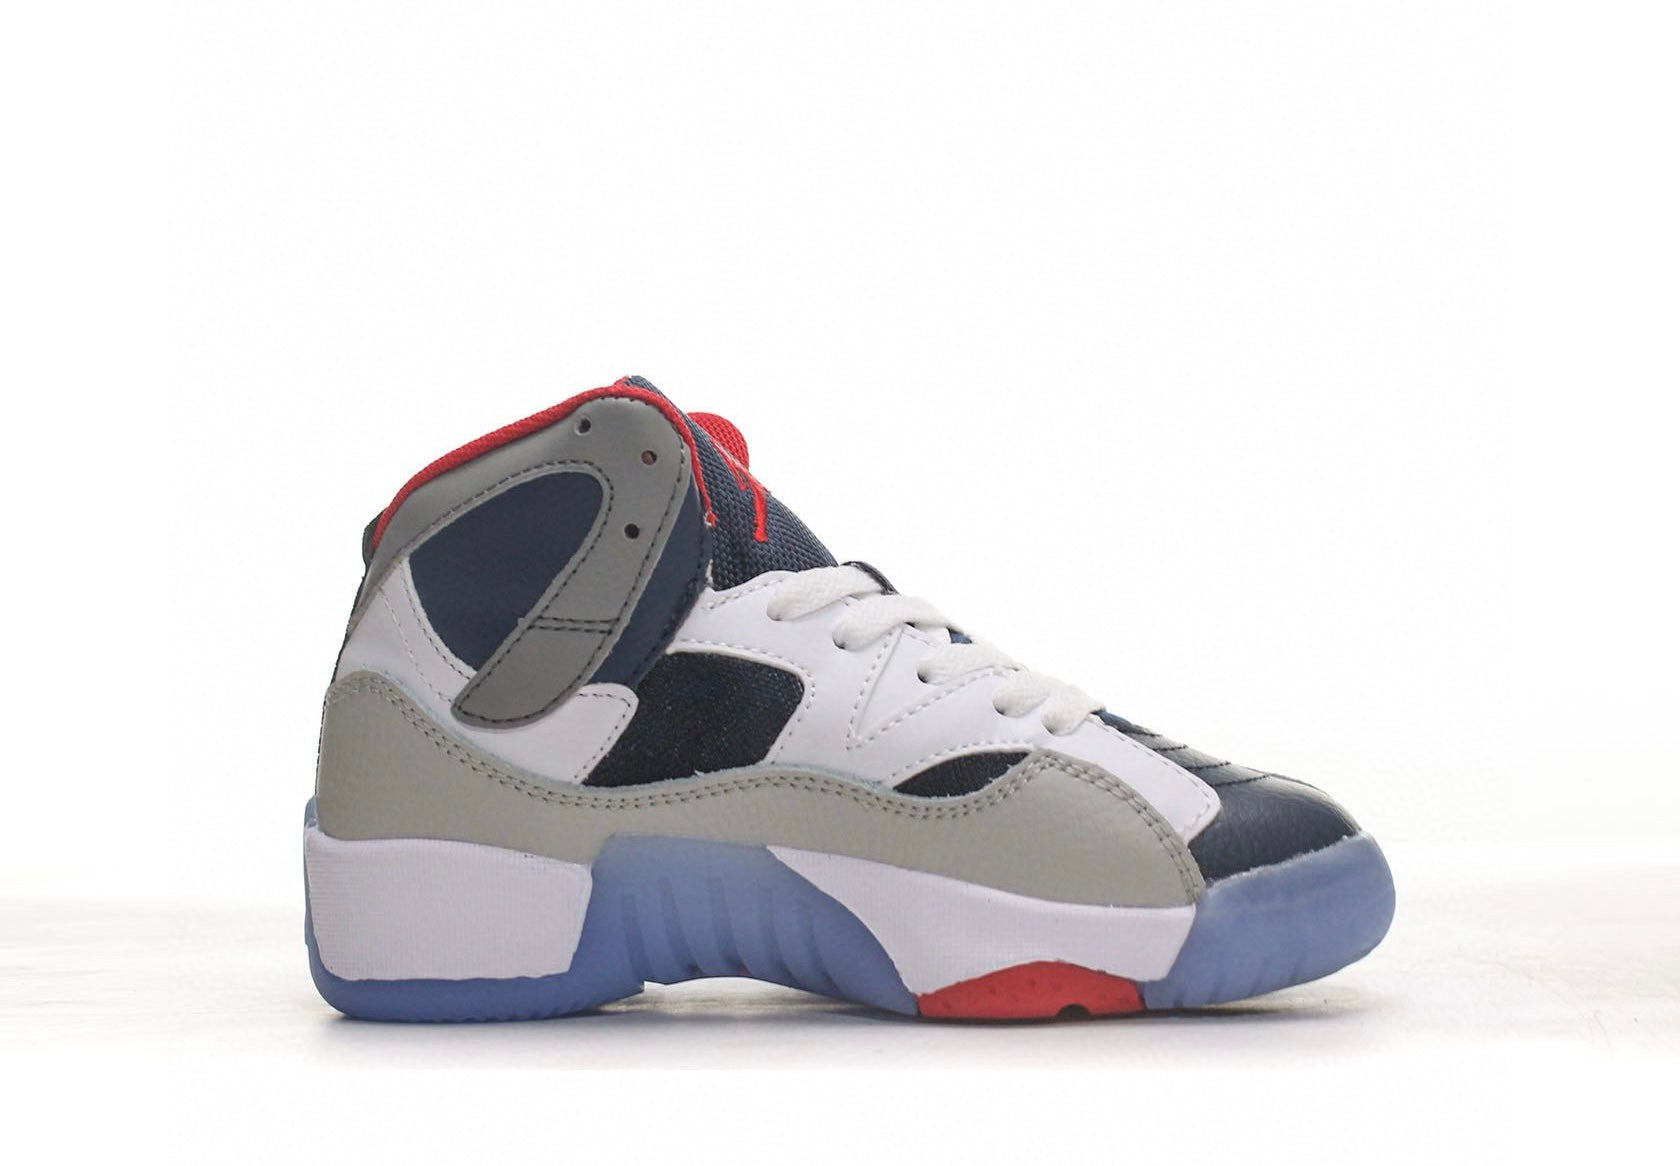 Nike air jordan rétro chaussures grises